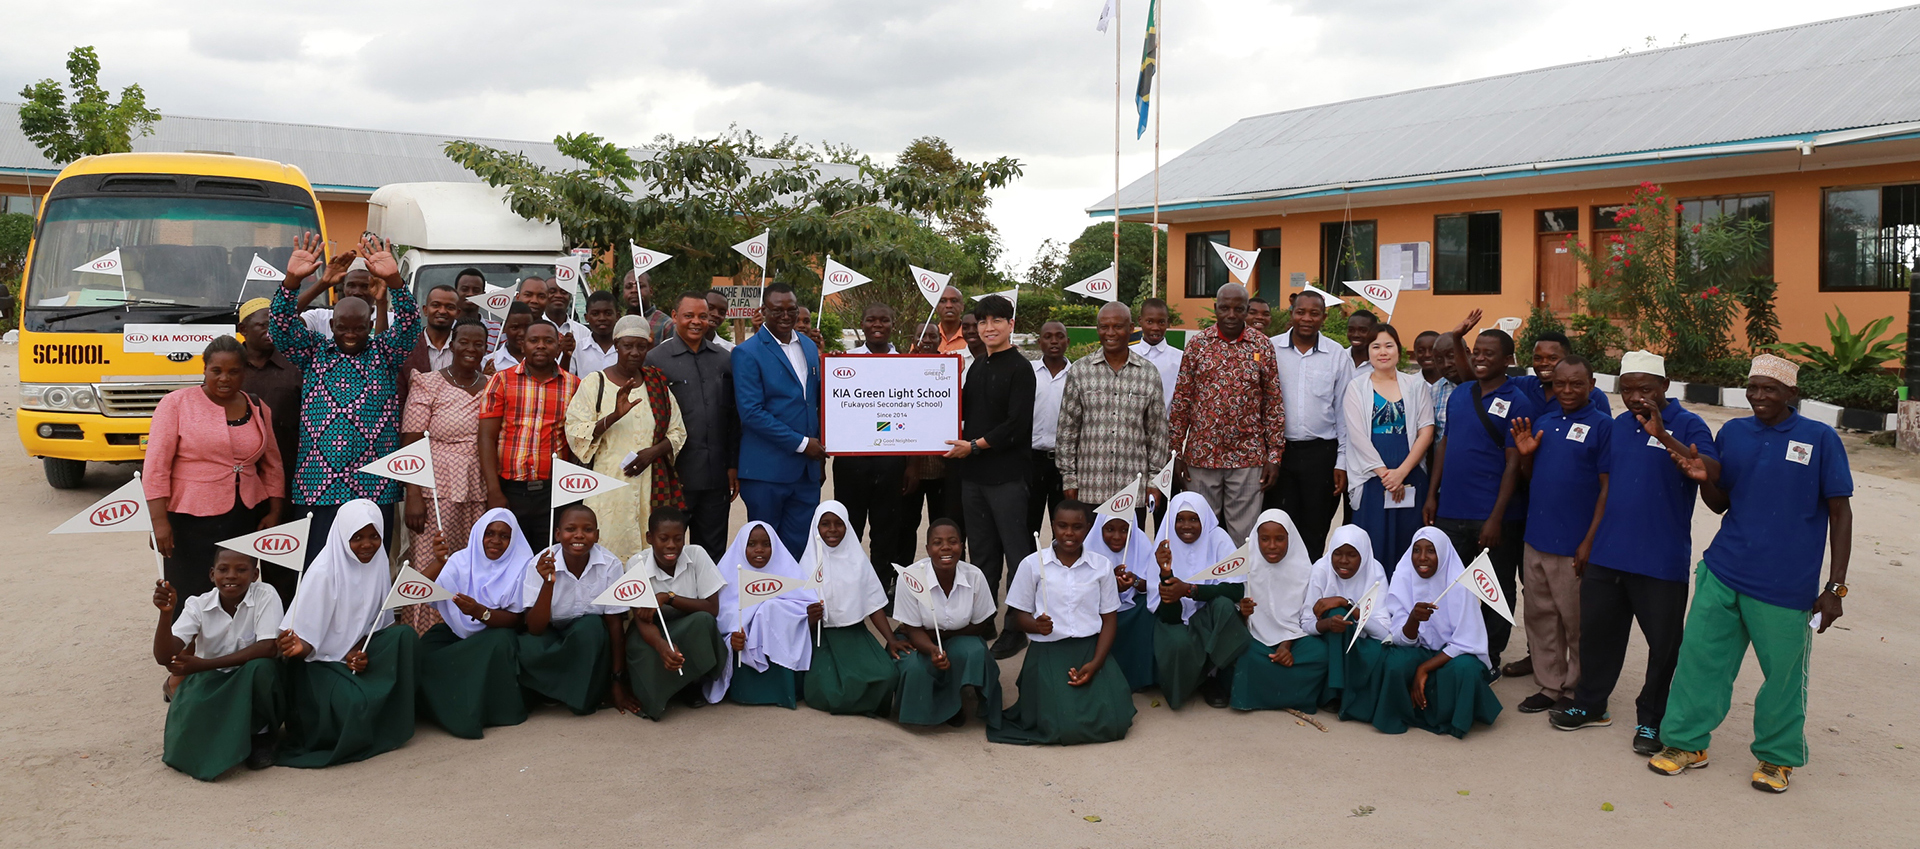 KIA entraga al Gobierno Tanzano la nueva KIA GREEN LIGHT SCHOOL